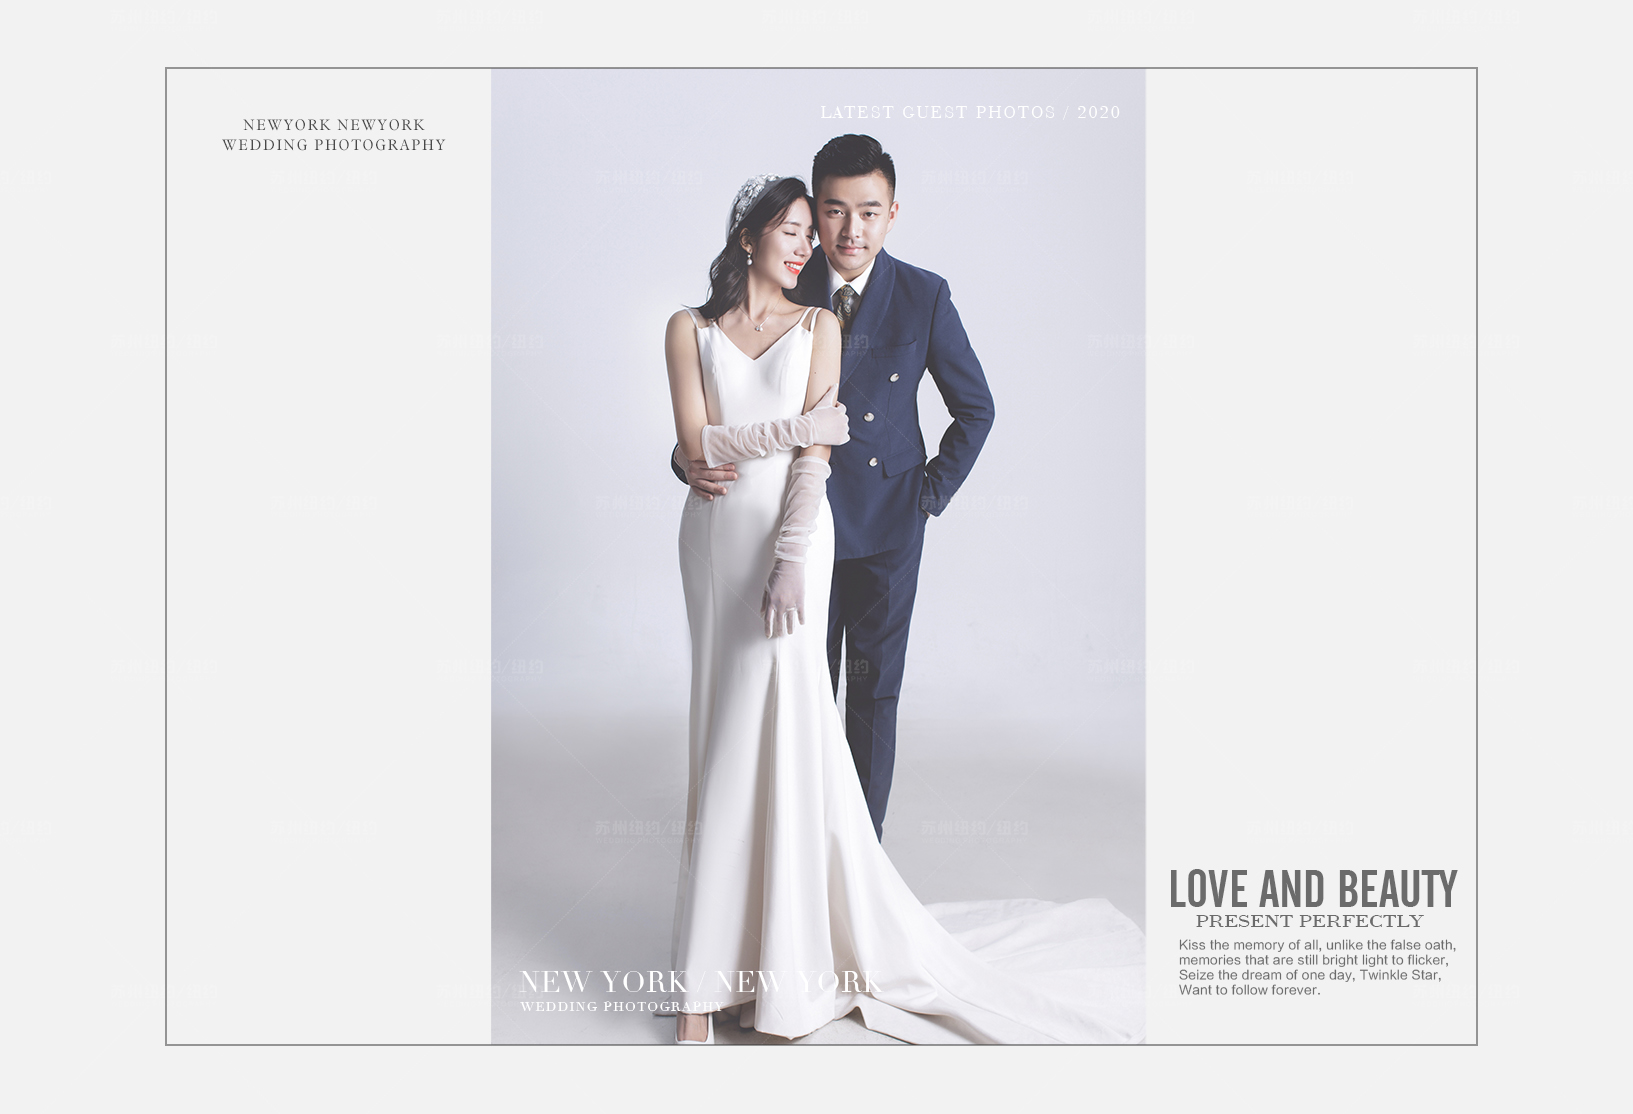 Mr.李 & Ms.徐（纽约纽约最新客照）婚纱摄影照